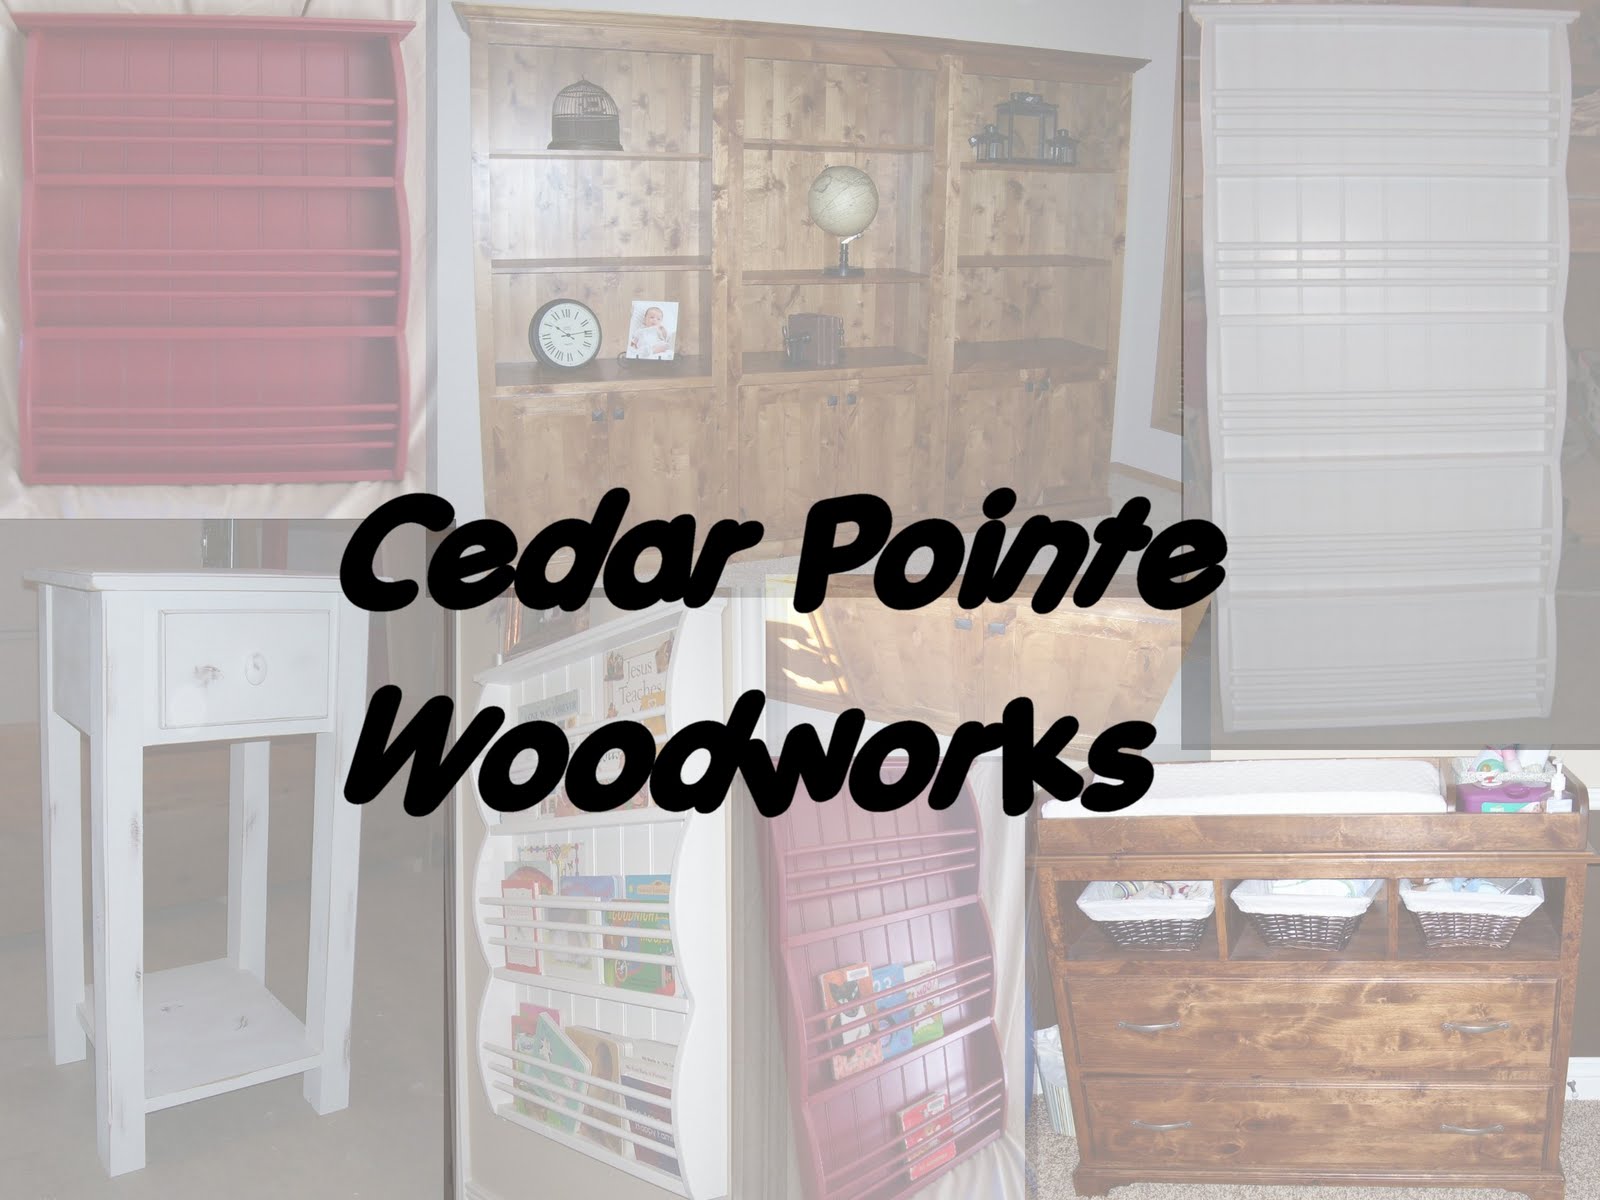 Cedar Pointe Woodworks